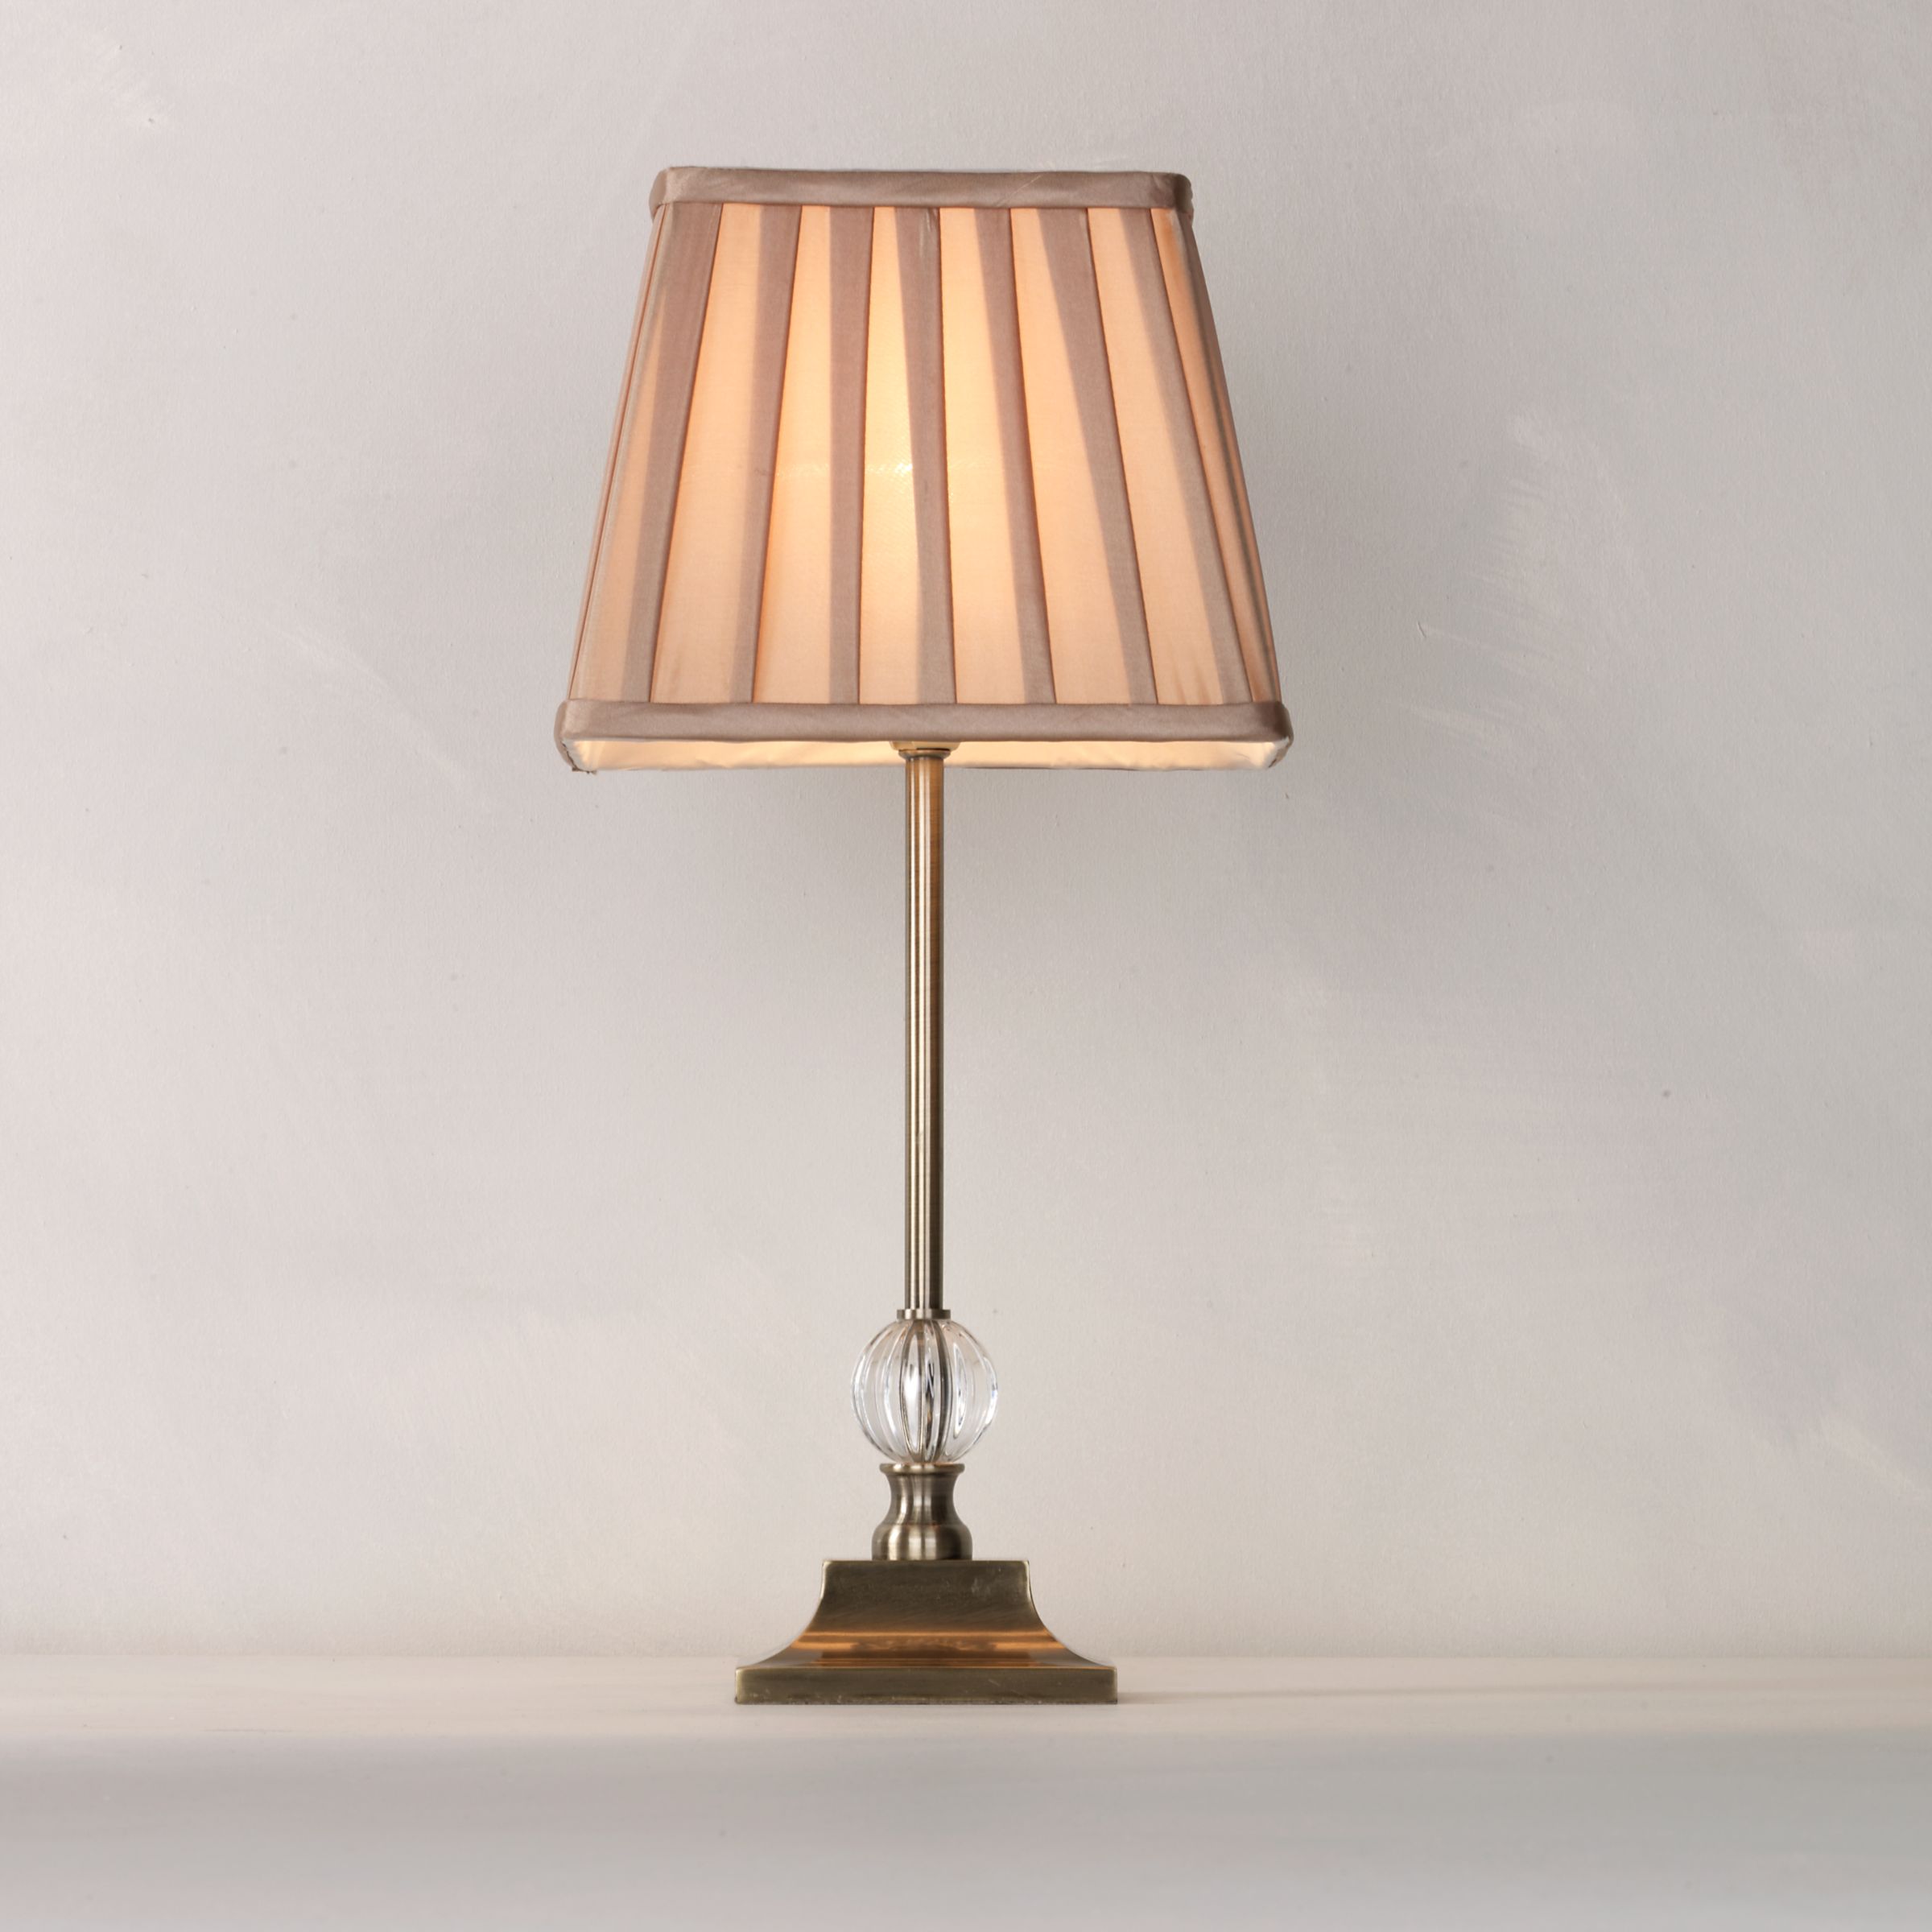 John Lewis Patricia Table Lamp 153542